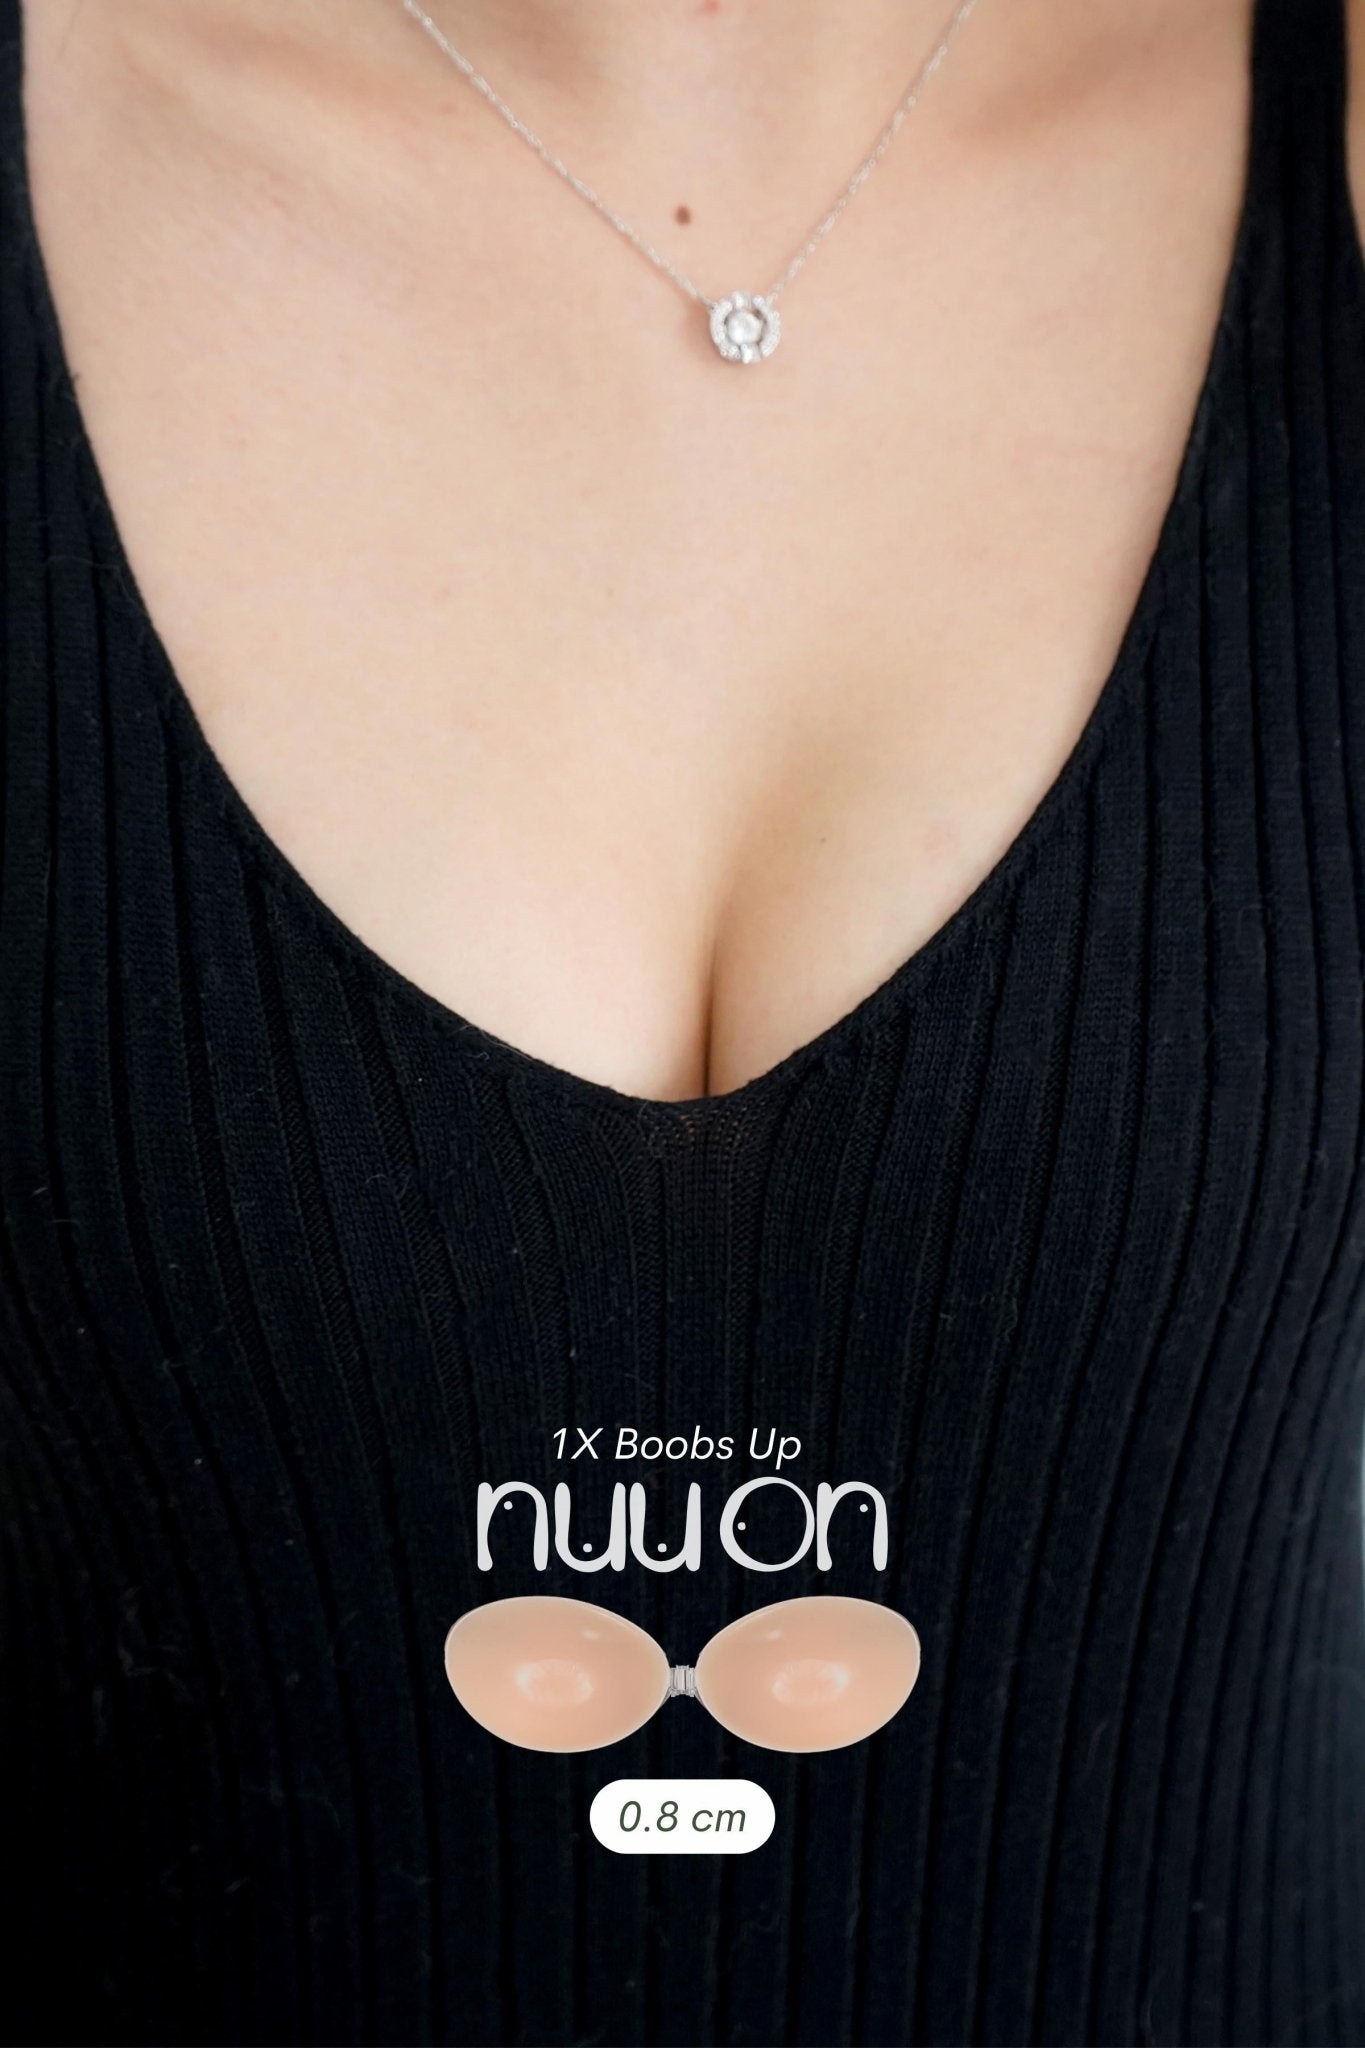 [PWP] 1X Boobs Up Nubra (0.8 cm) - Adelais Lingerie